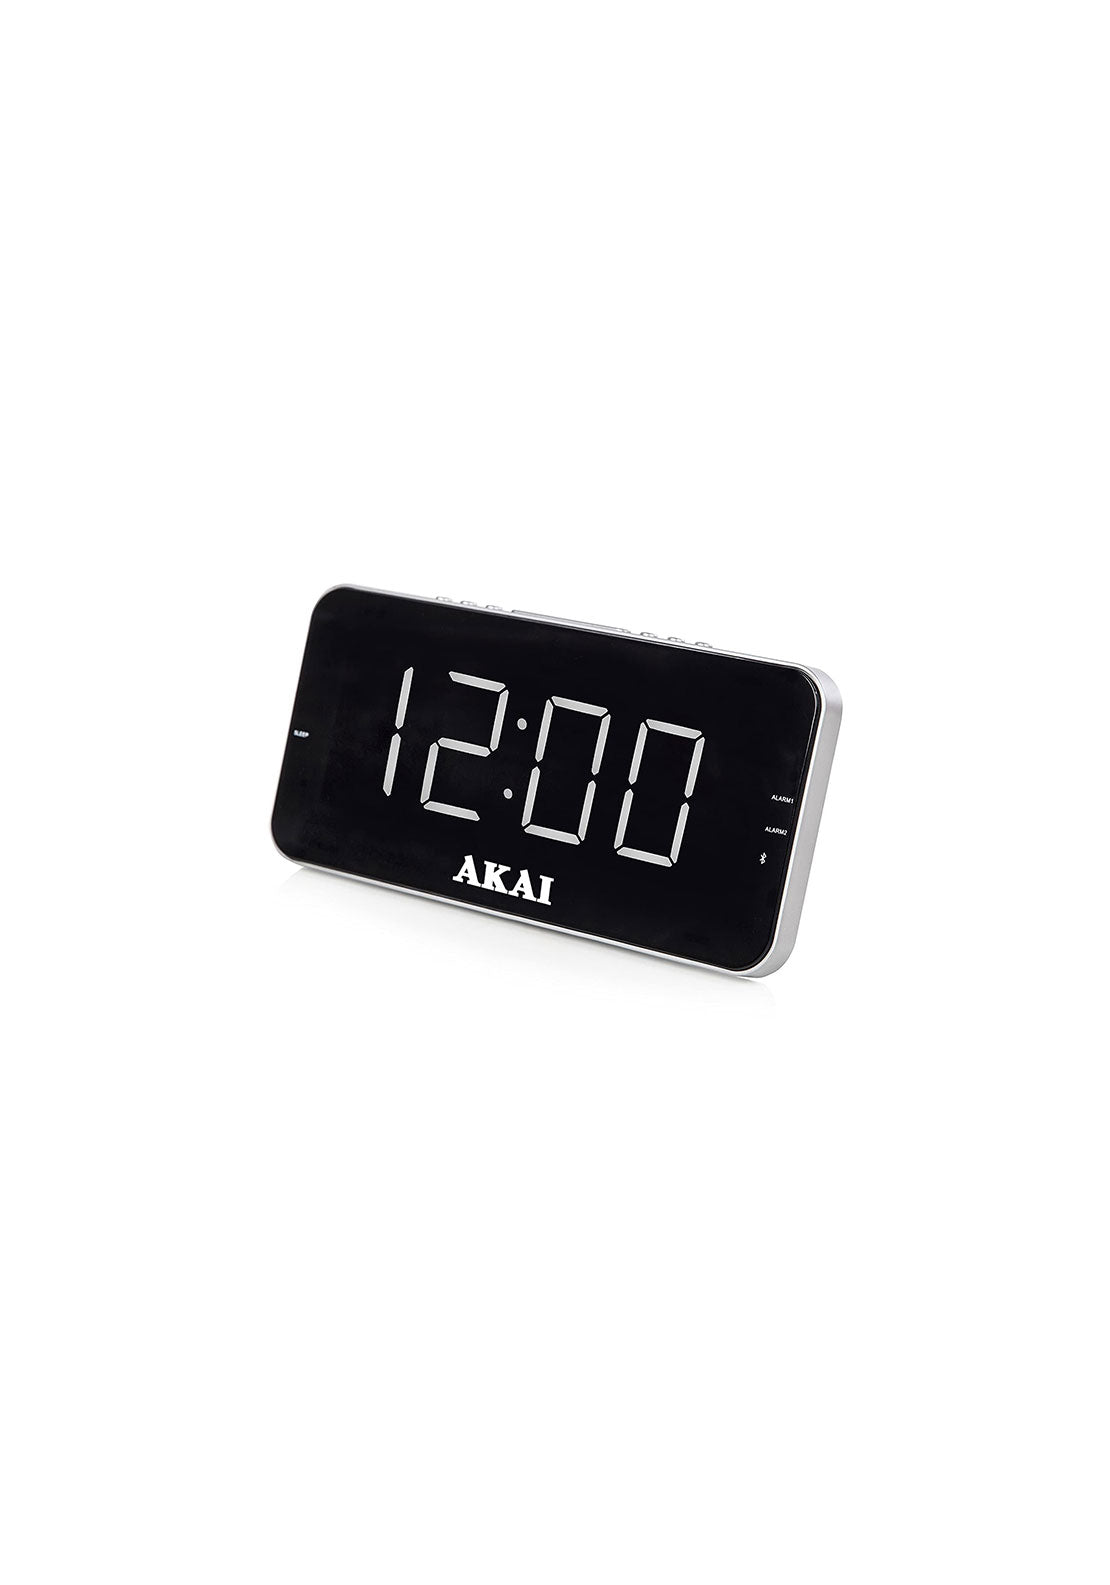 Akai Am/Fm Alarm Clock Radio | A61019 - Black 1 Shaws Department Stores